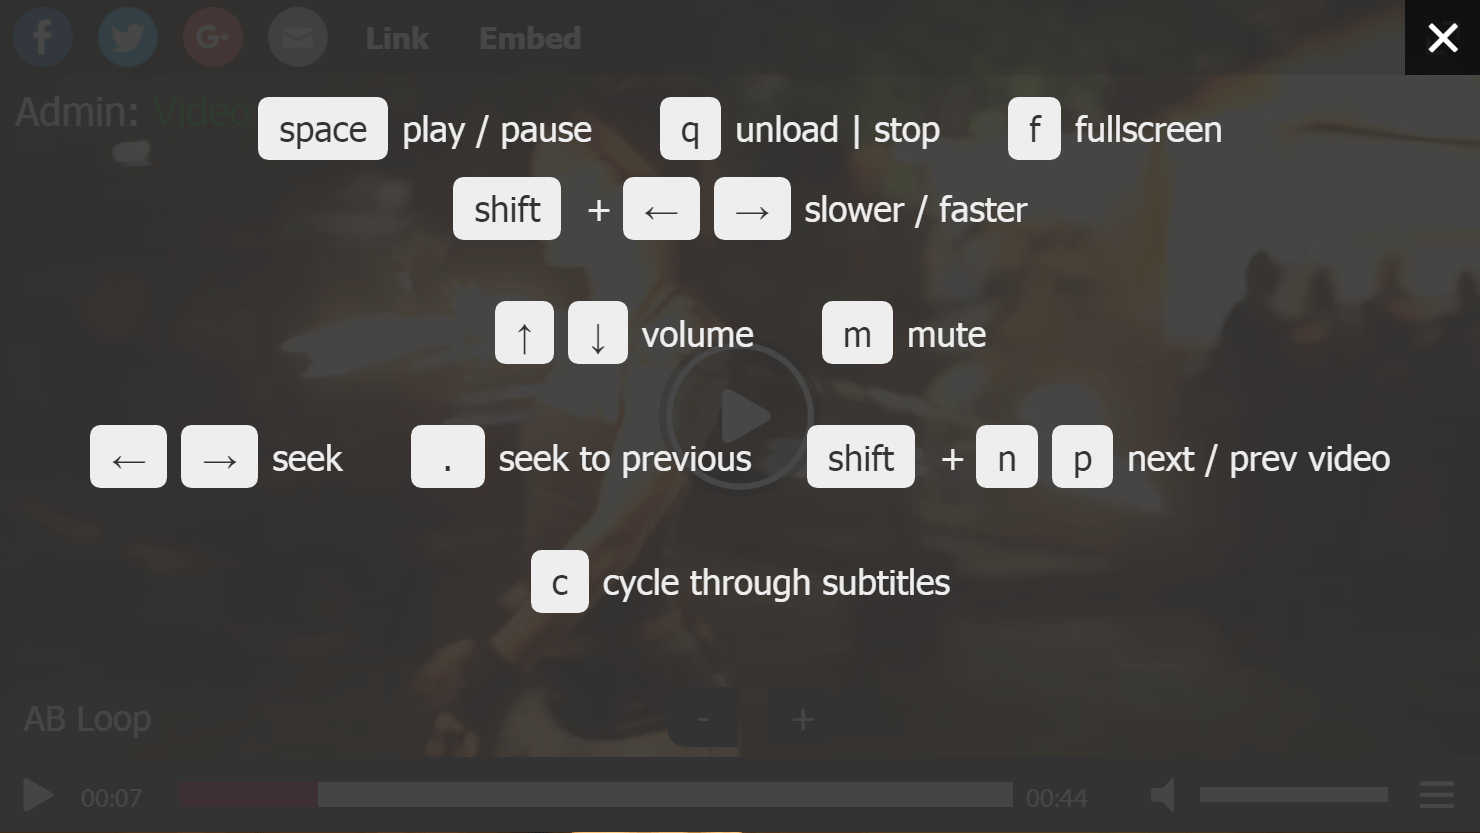 FV Player's keyboard shortcuts